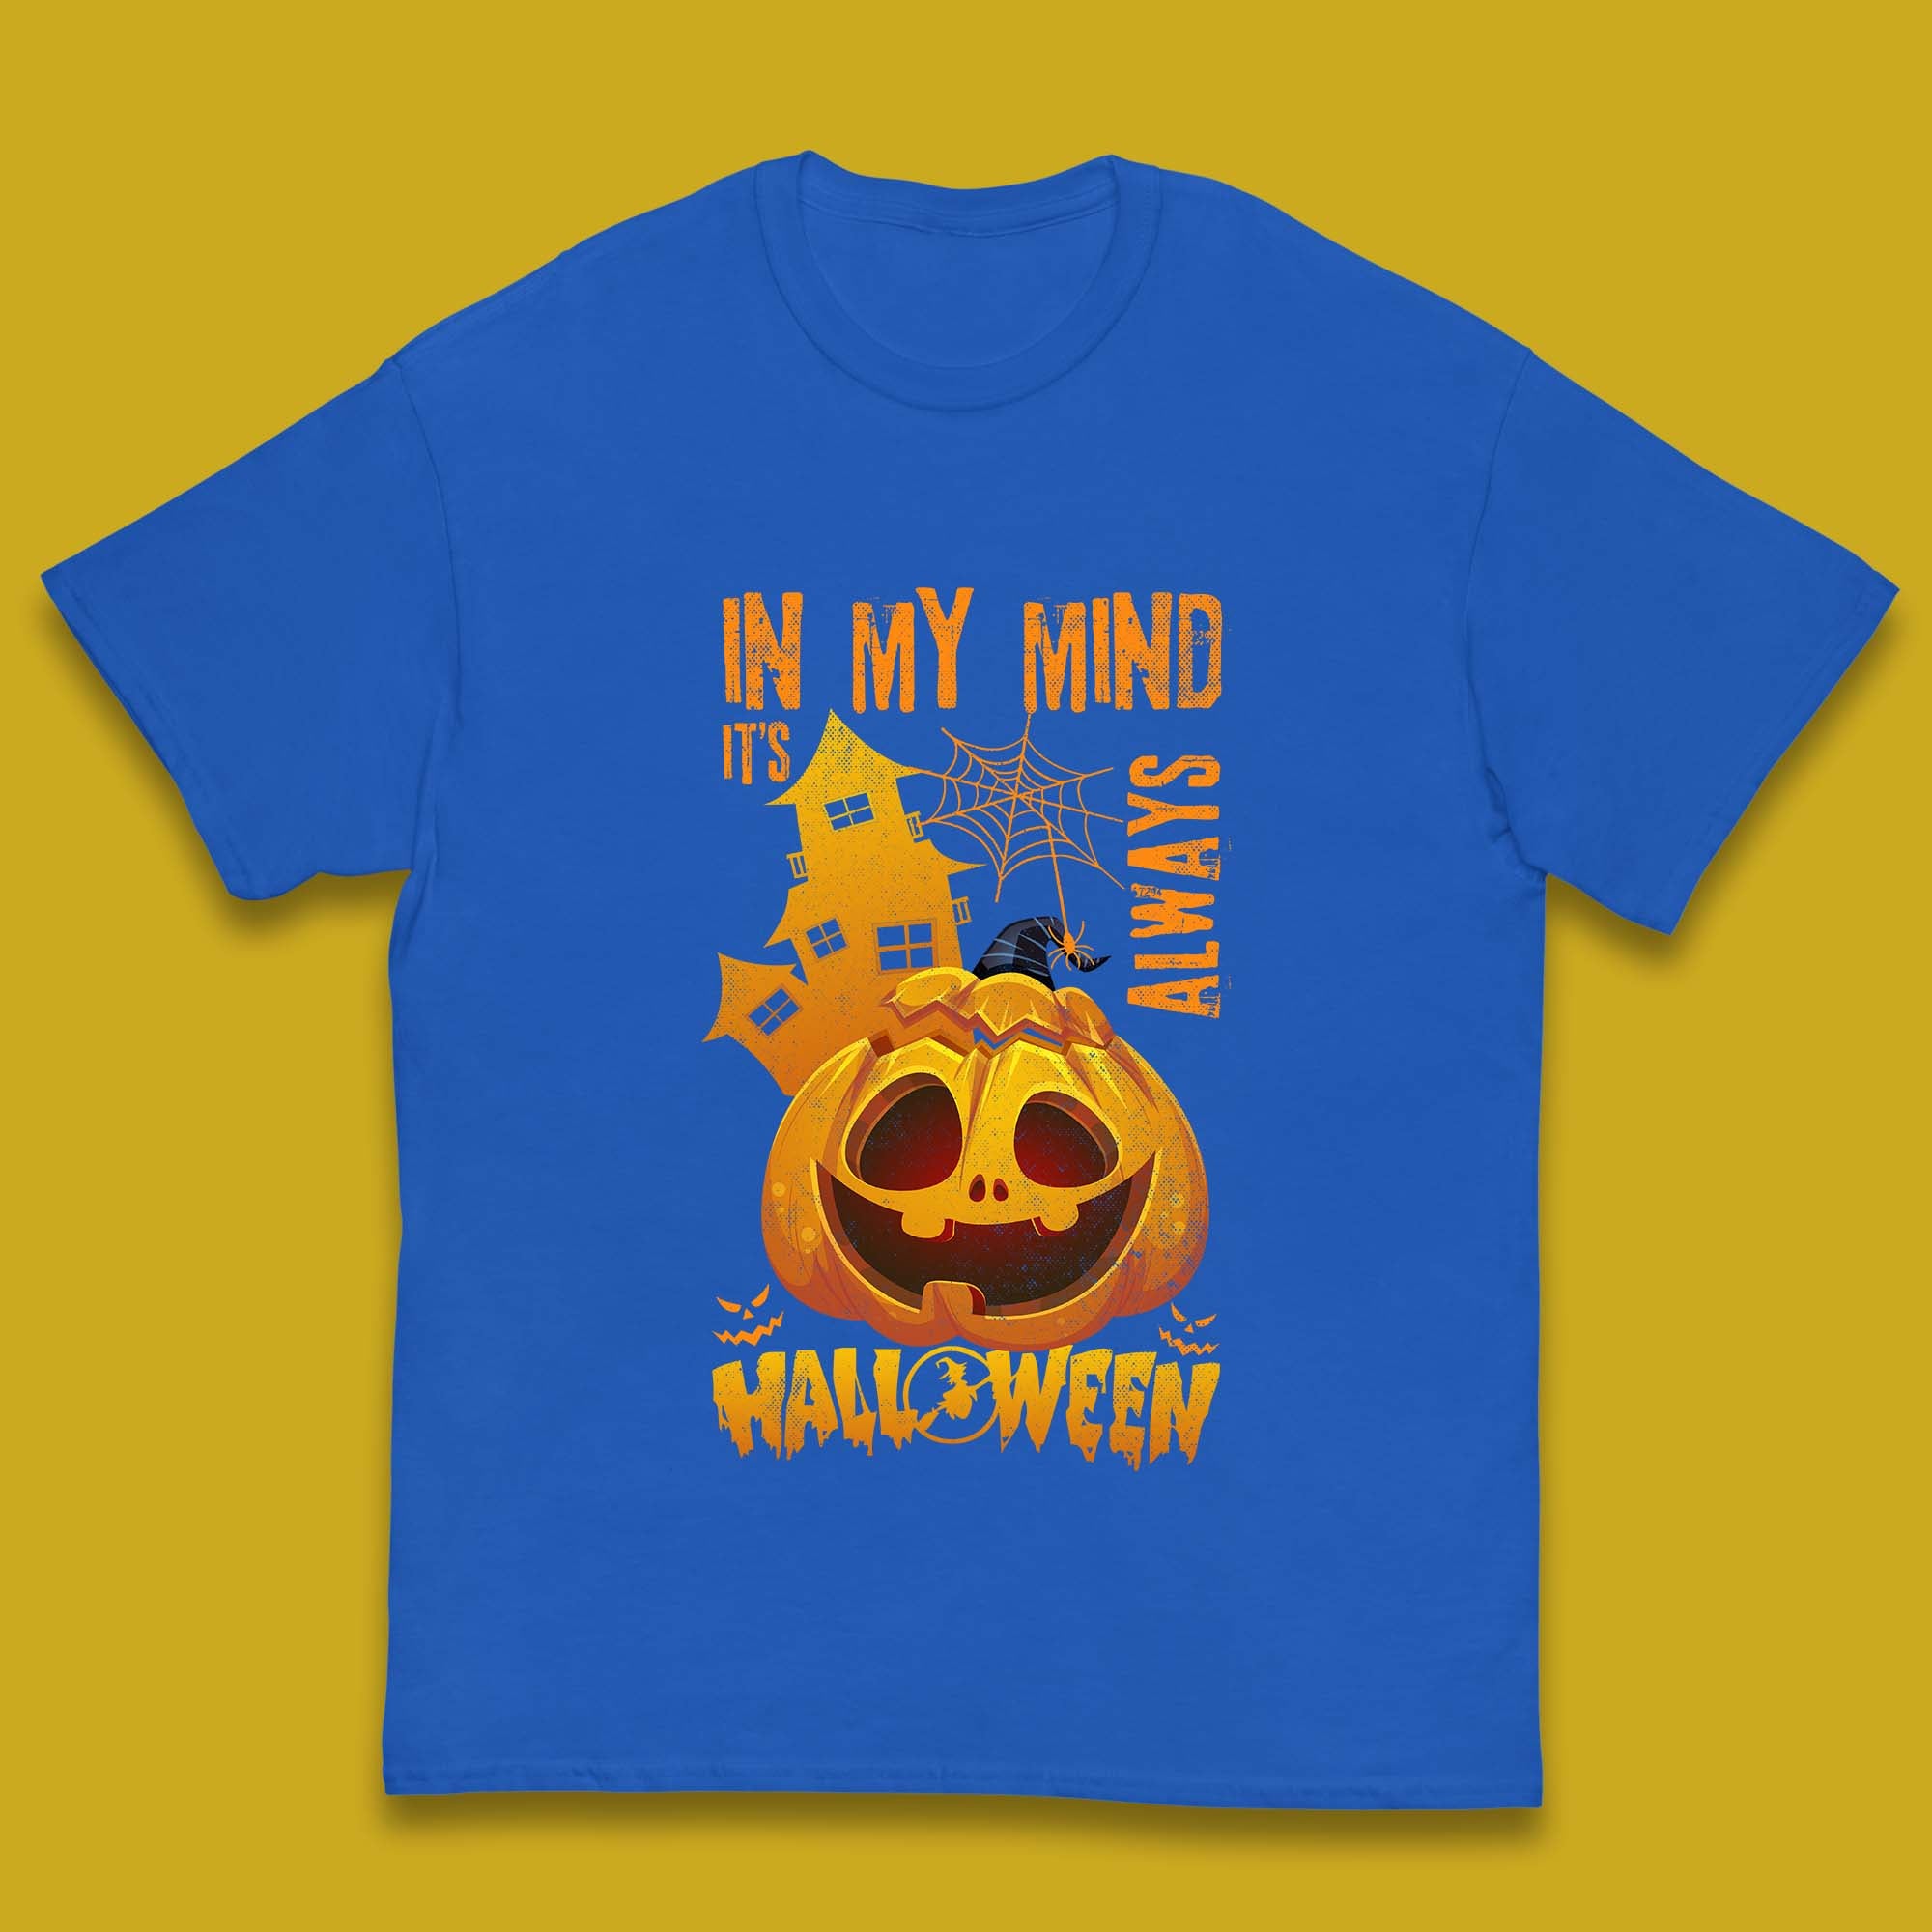 In My Mind It's Always Halloween Haunted House Horror Scary Monster Pumpkin Kids T Shirt